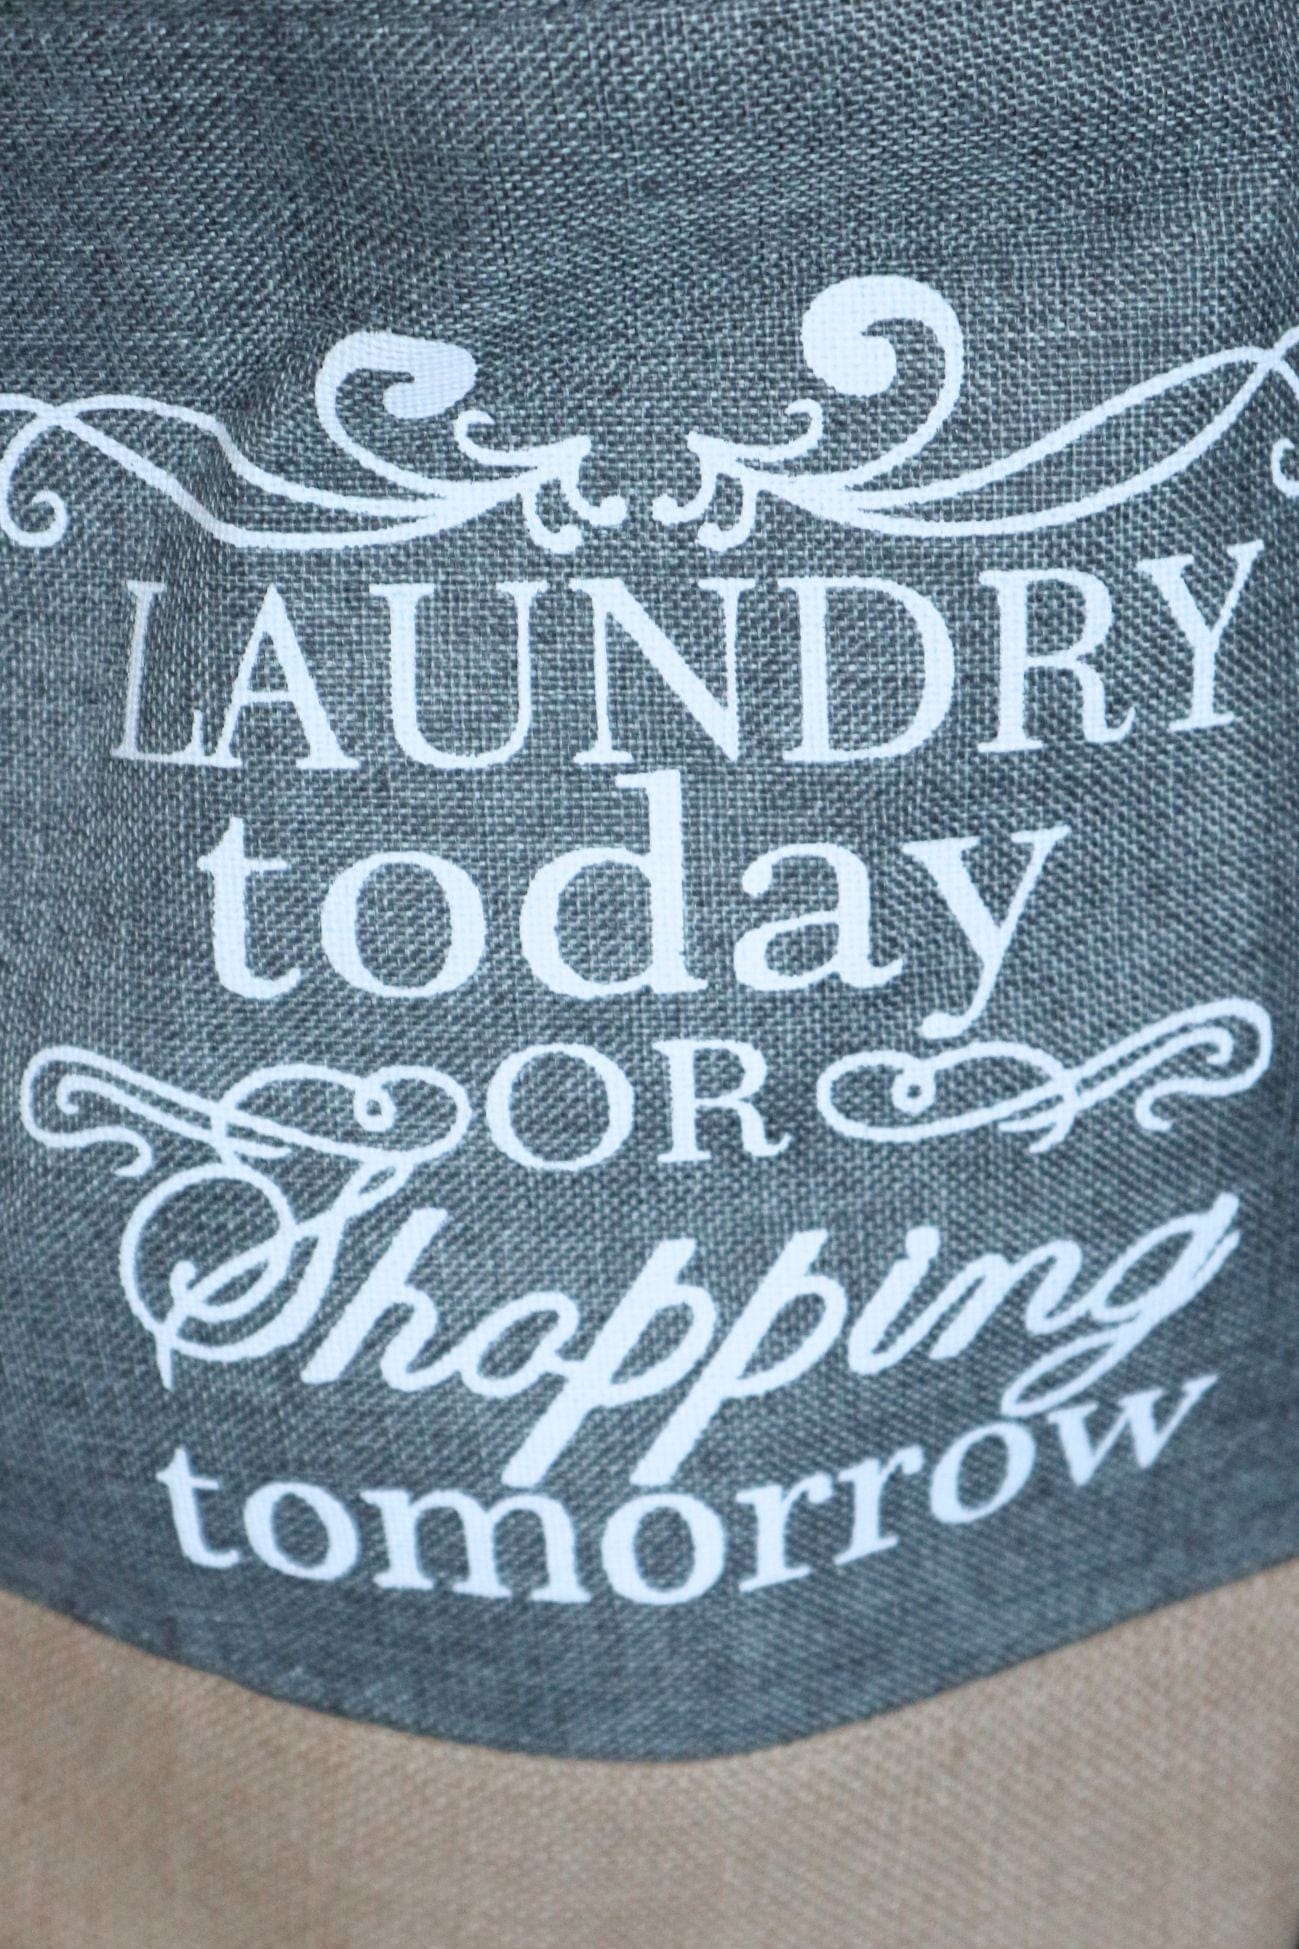 Item International Laundry Today Laundry Today - Cesto portabiancheria grigio grande con manici | Item International